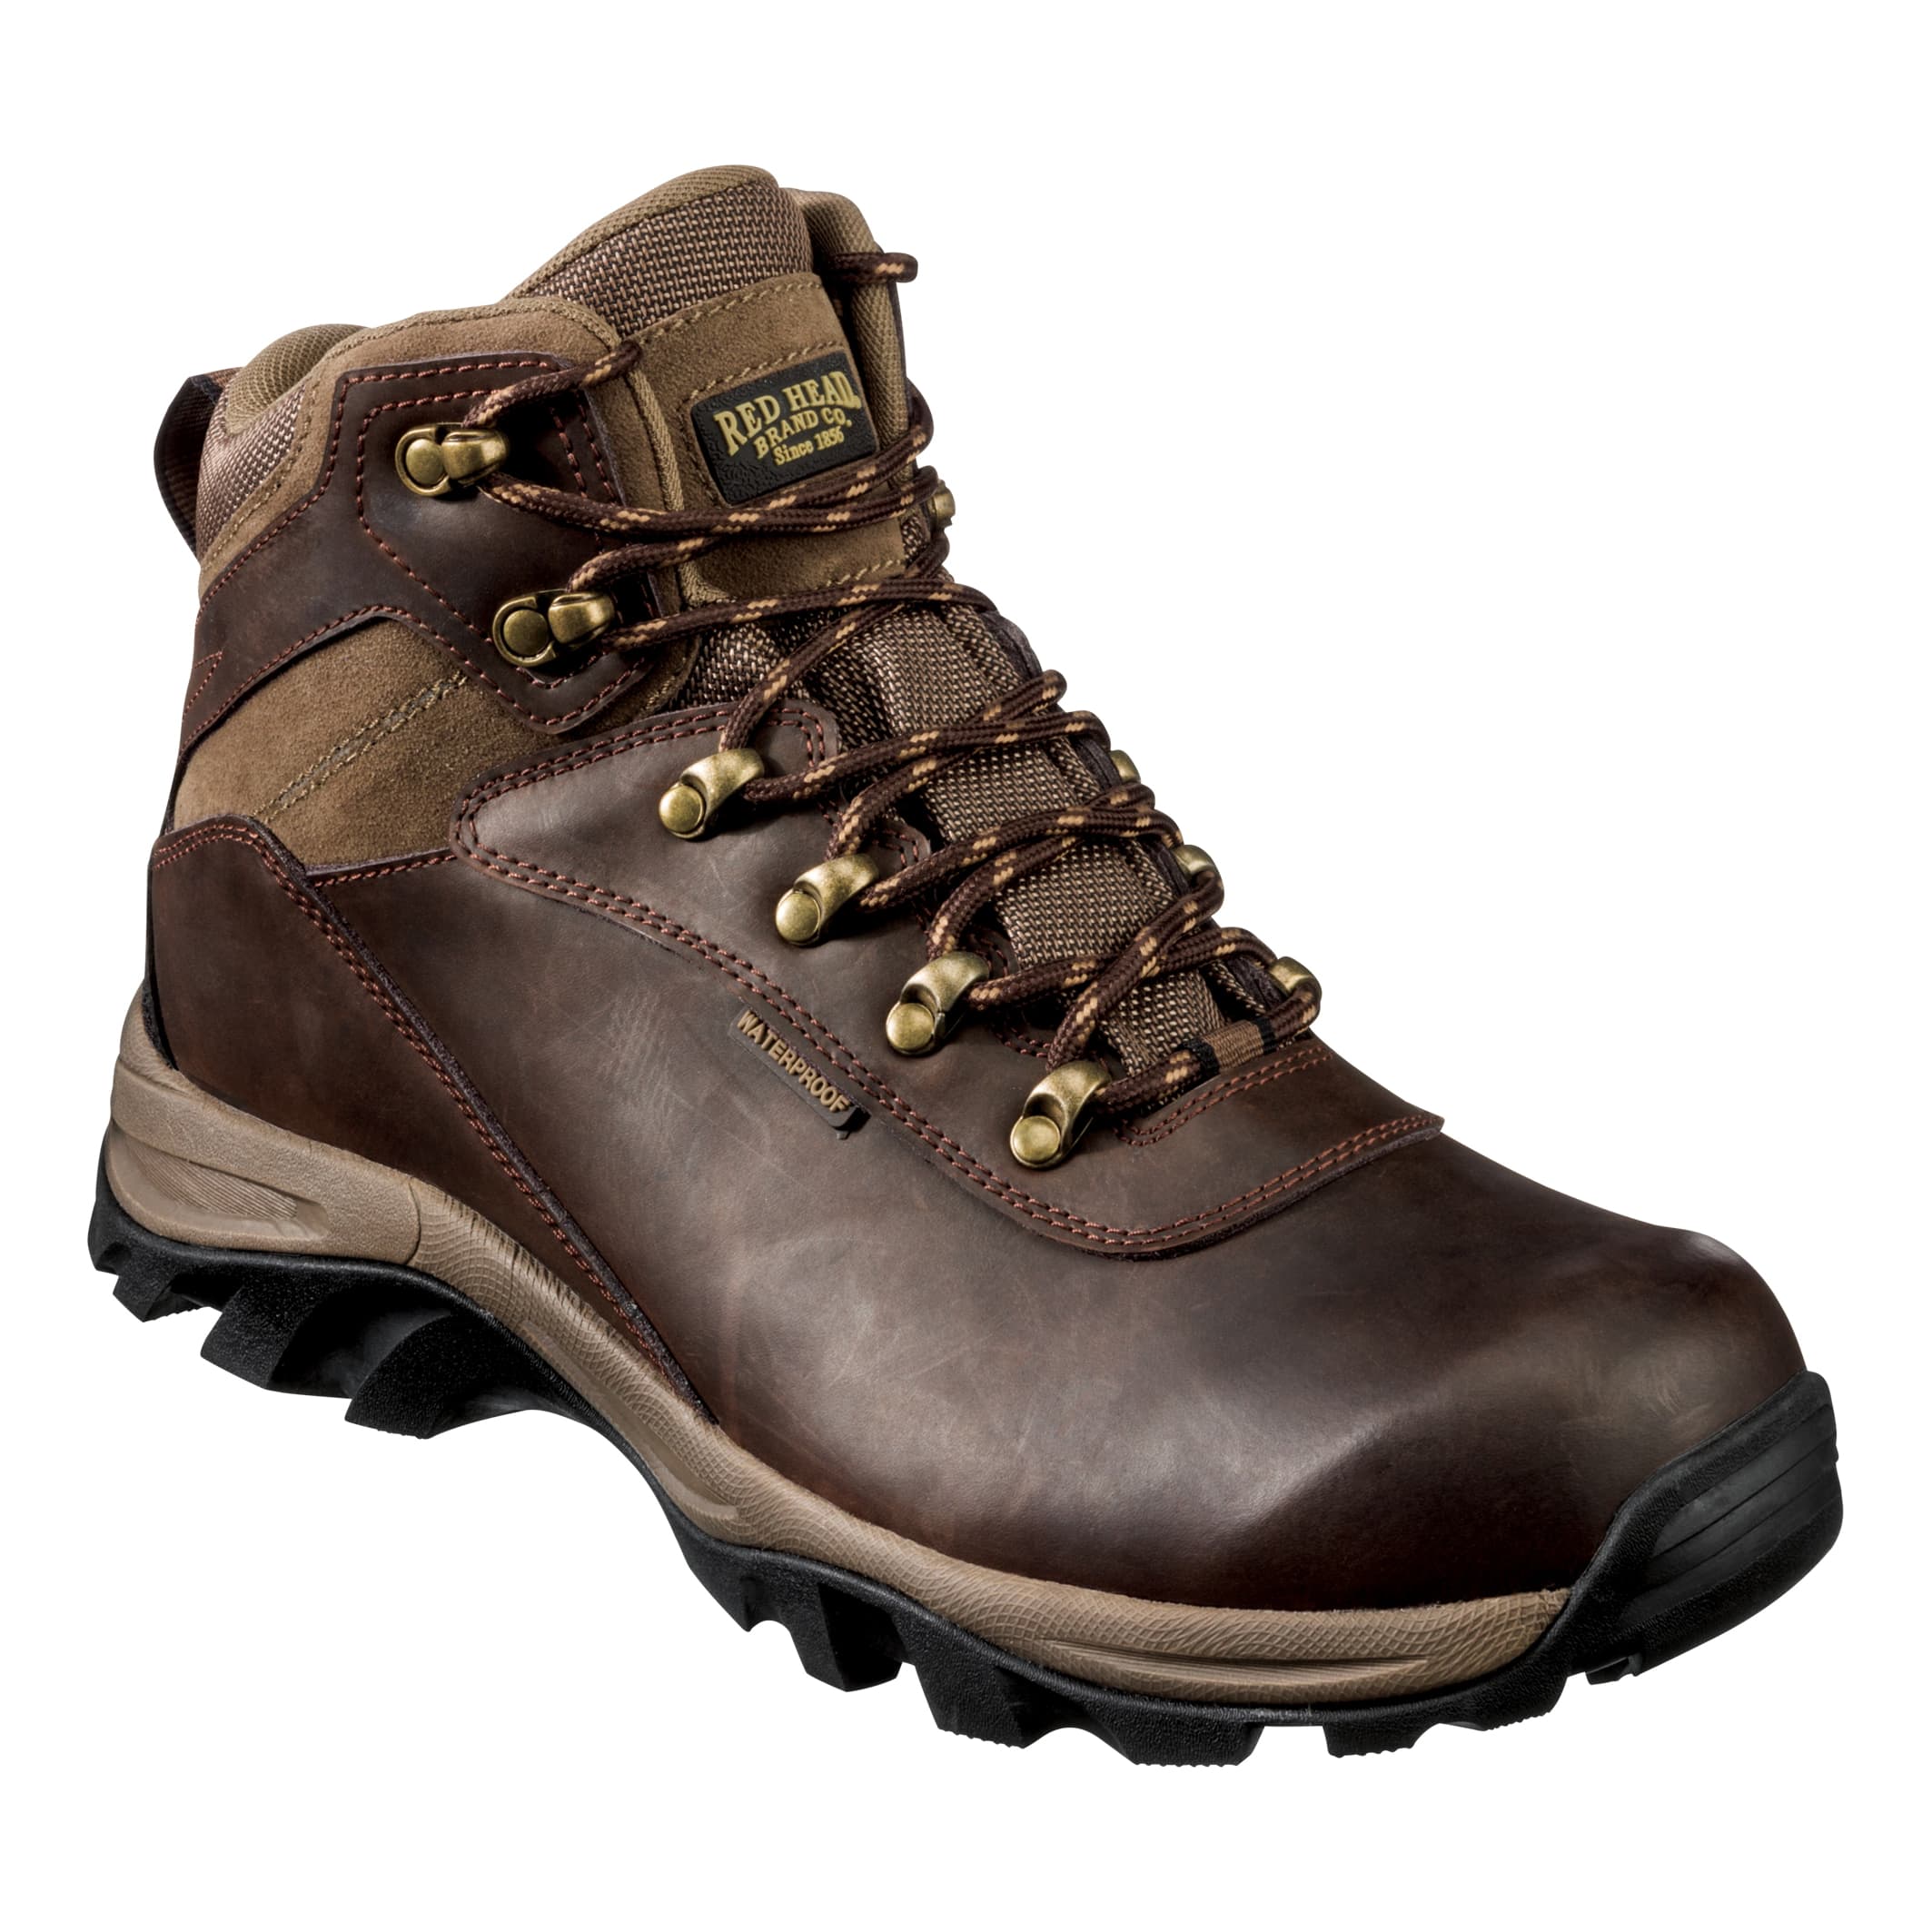 RedHead® Men’s Wildcat Hiking Boots